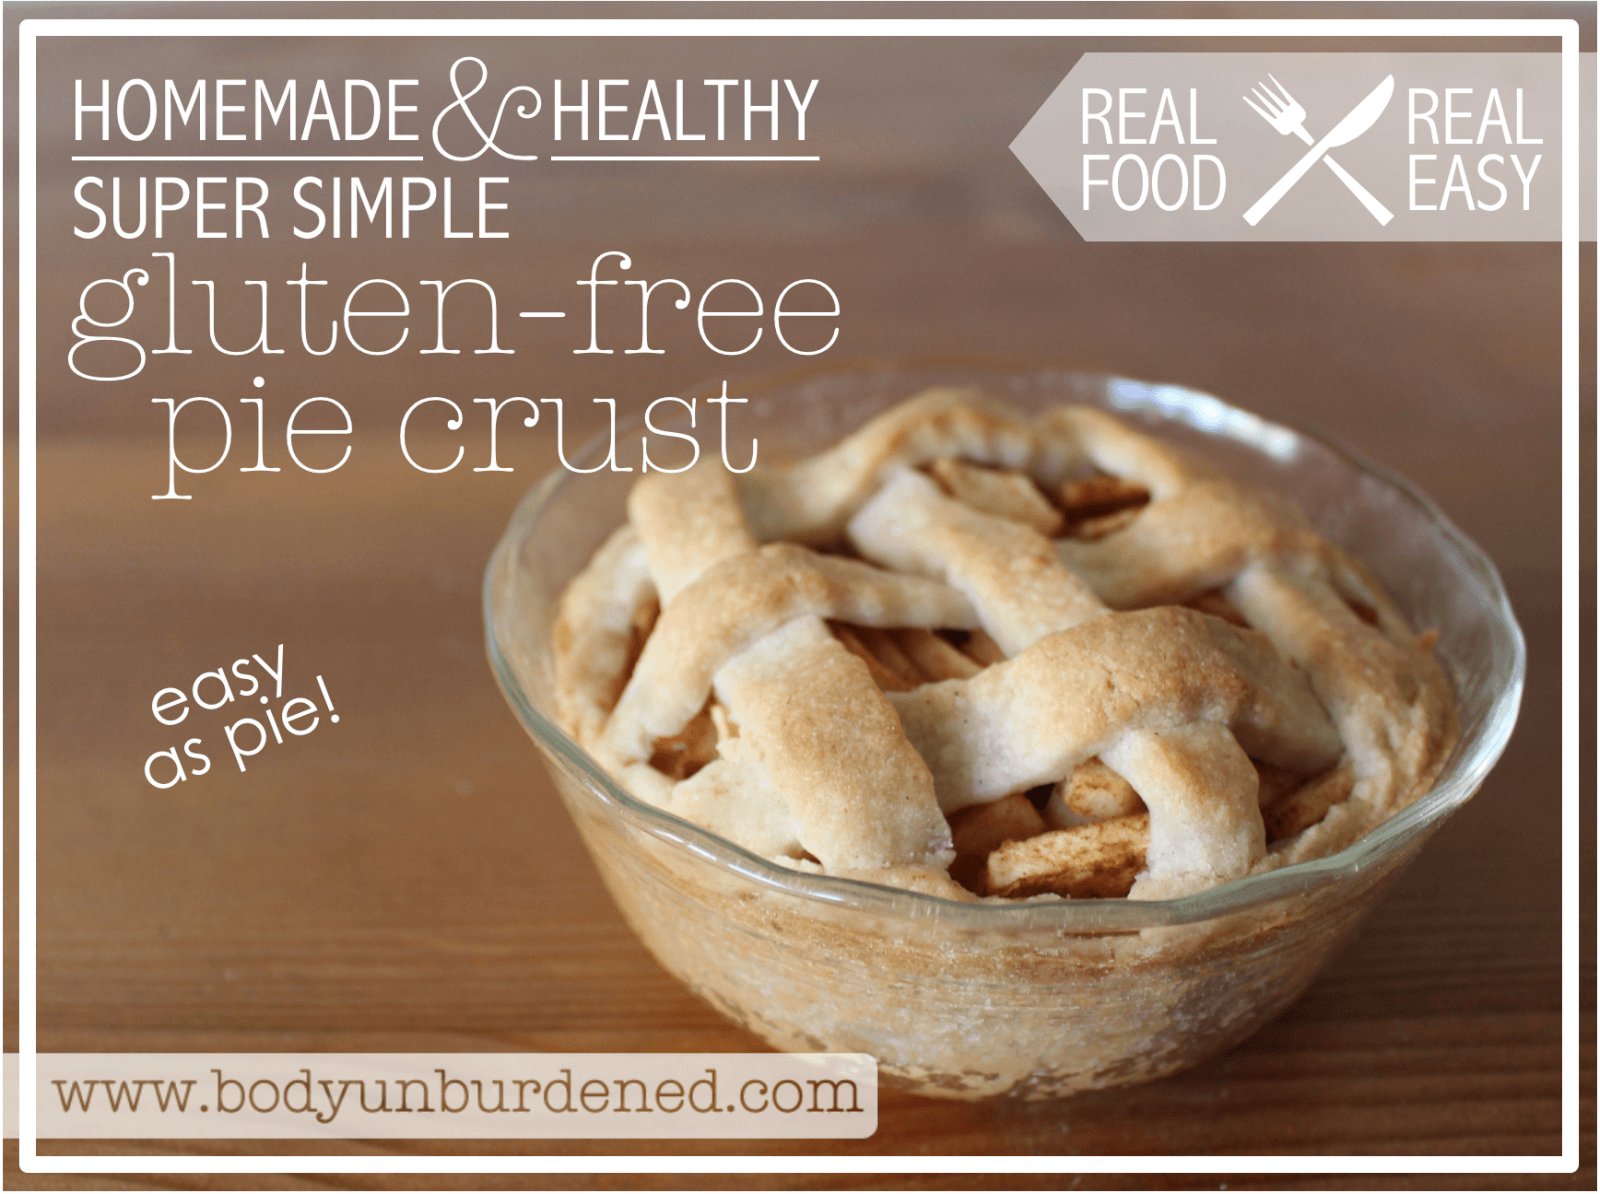 How can you make a gluten-free pie crust?